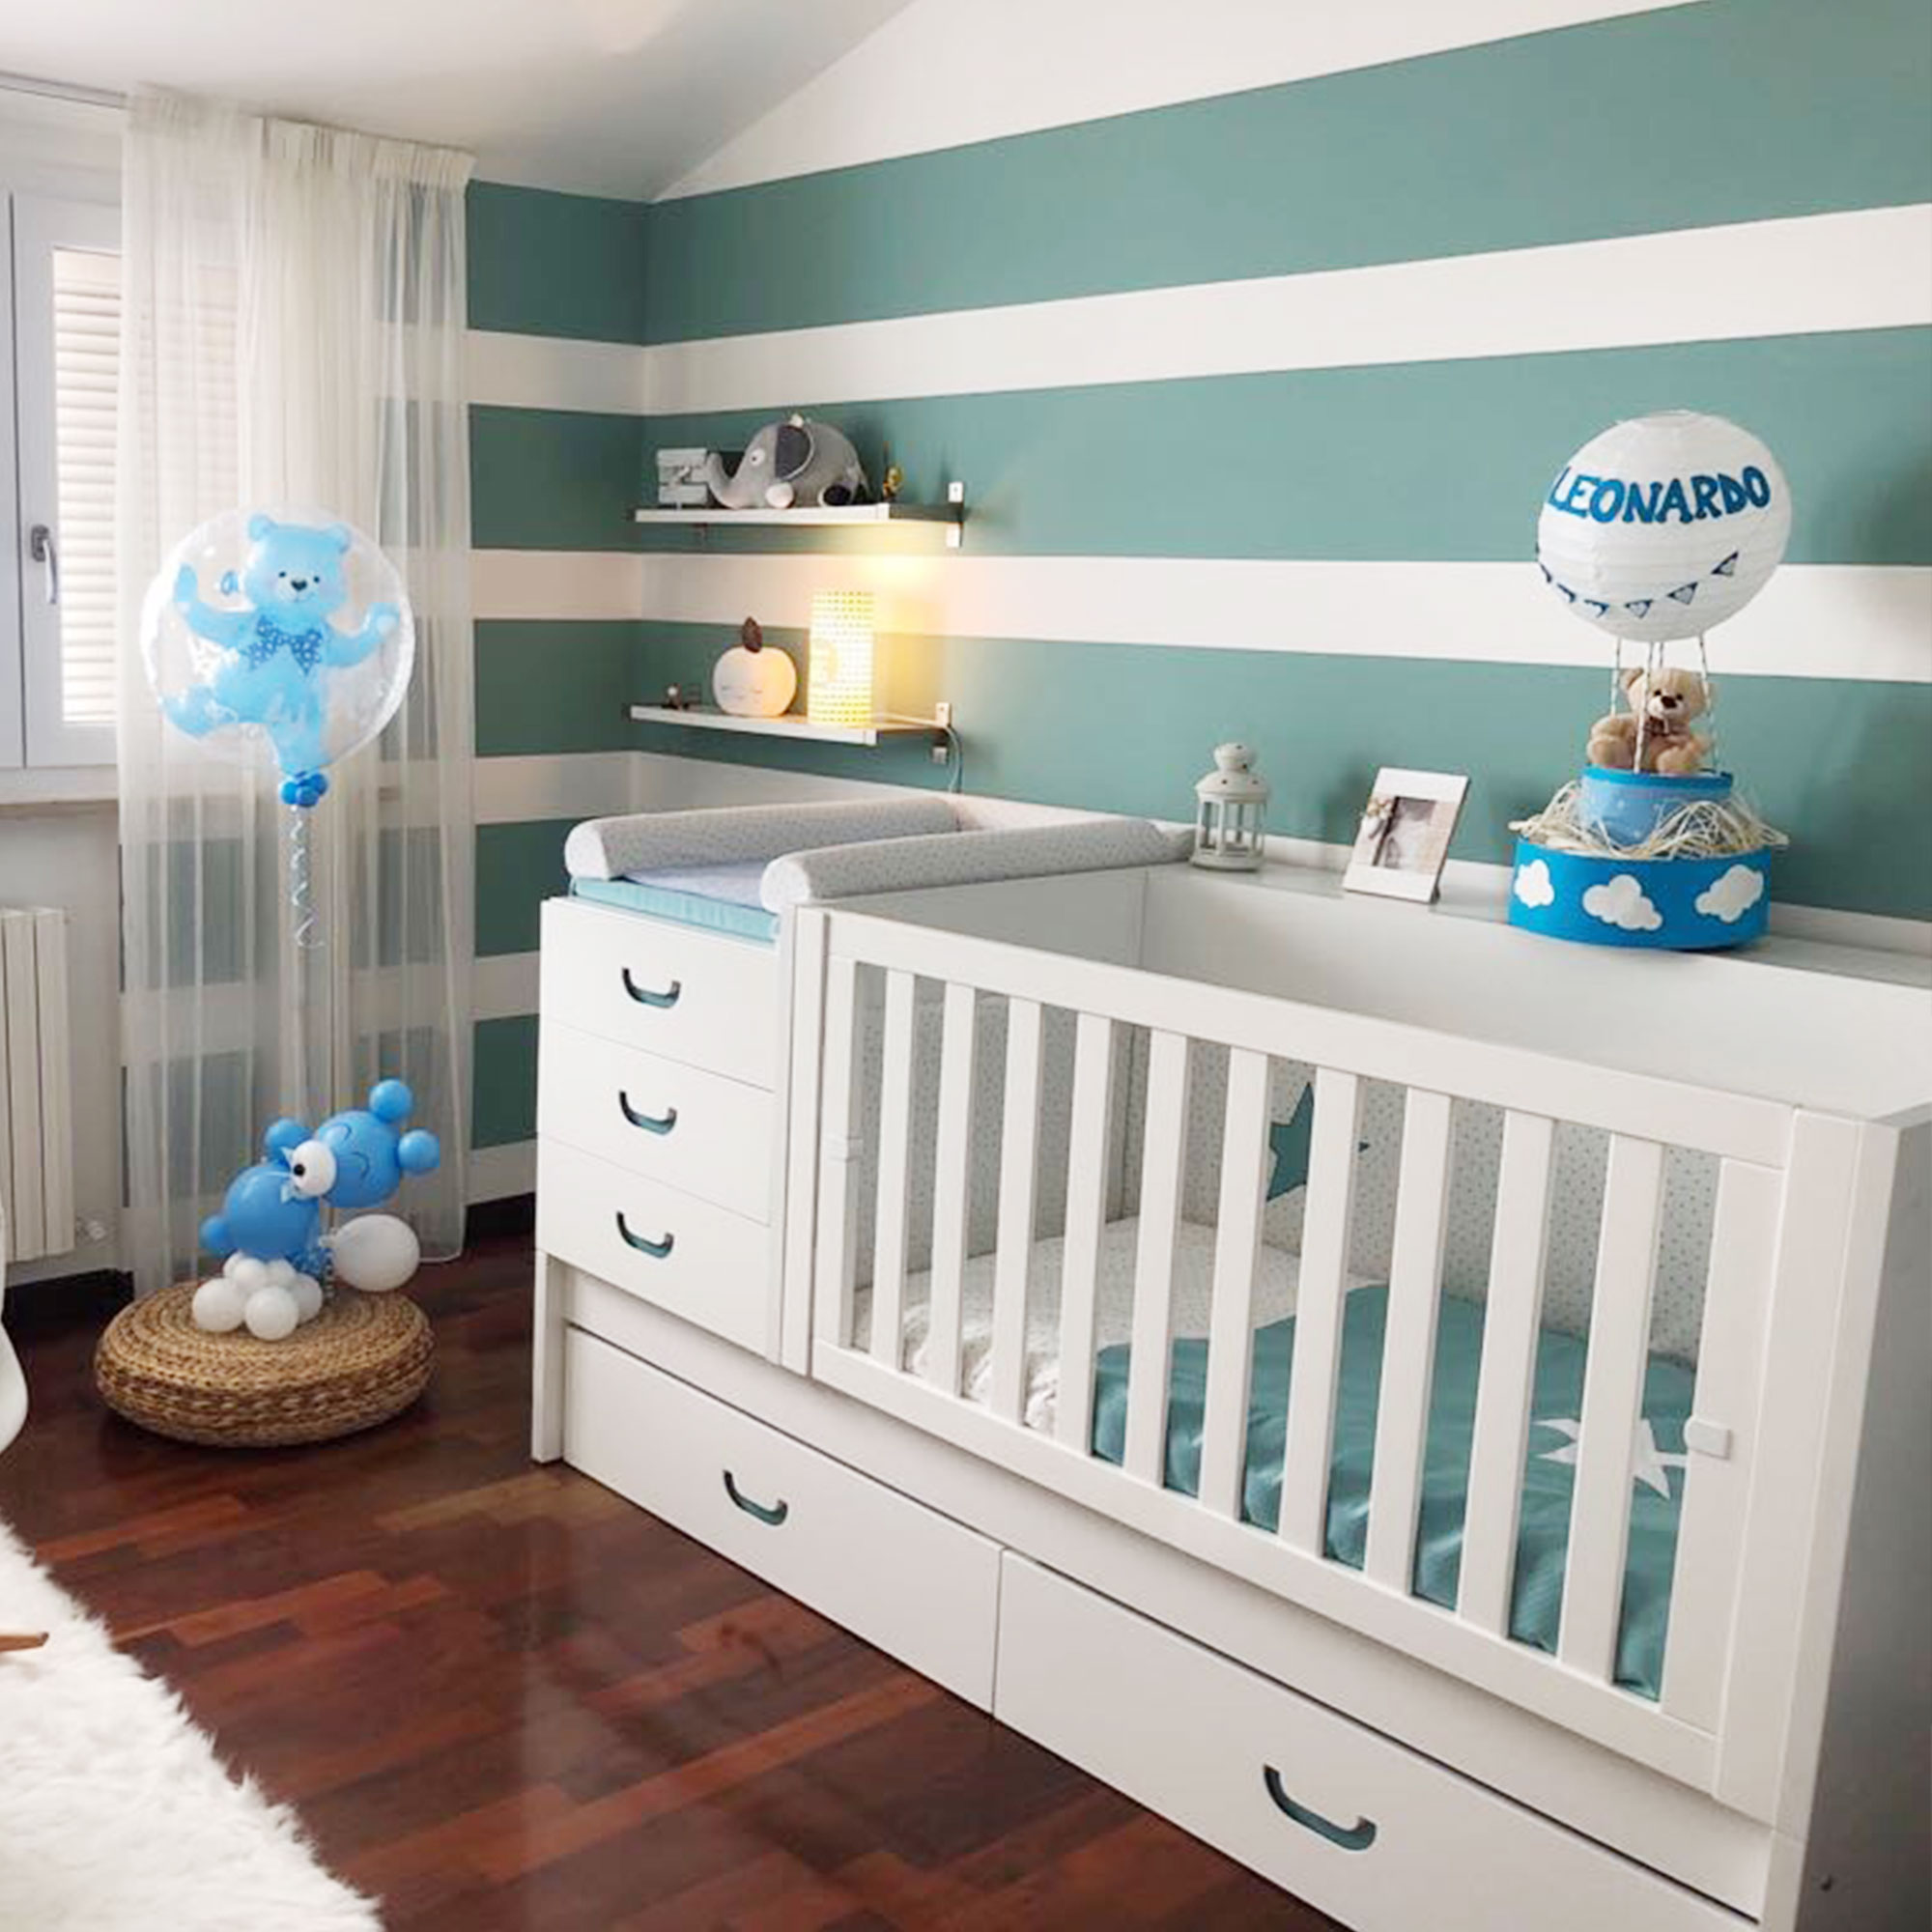 Convertible crib into a baby room